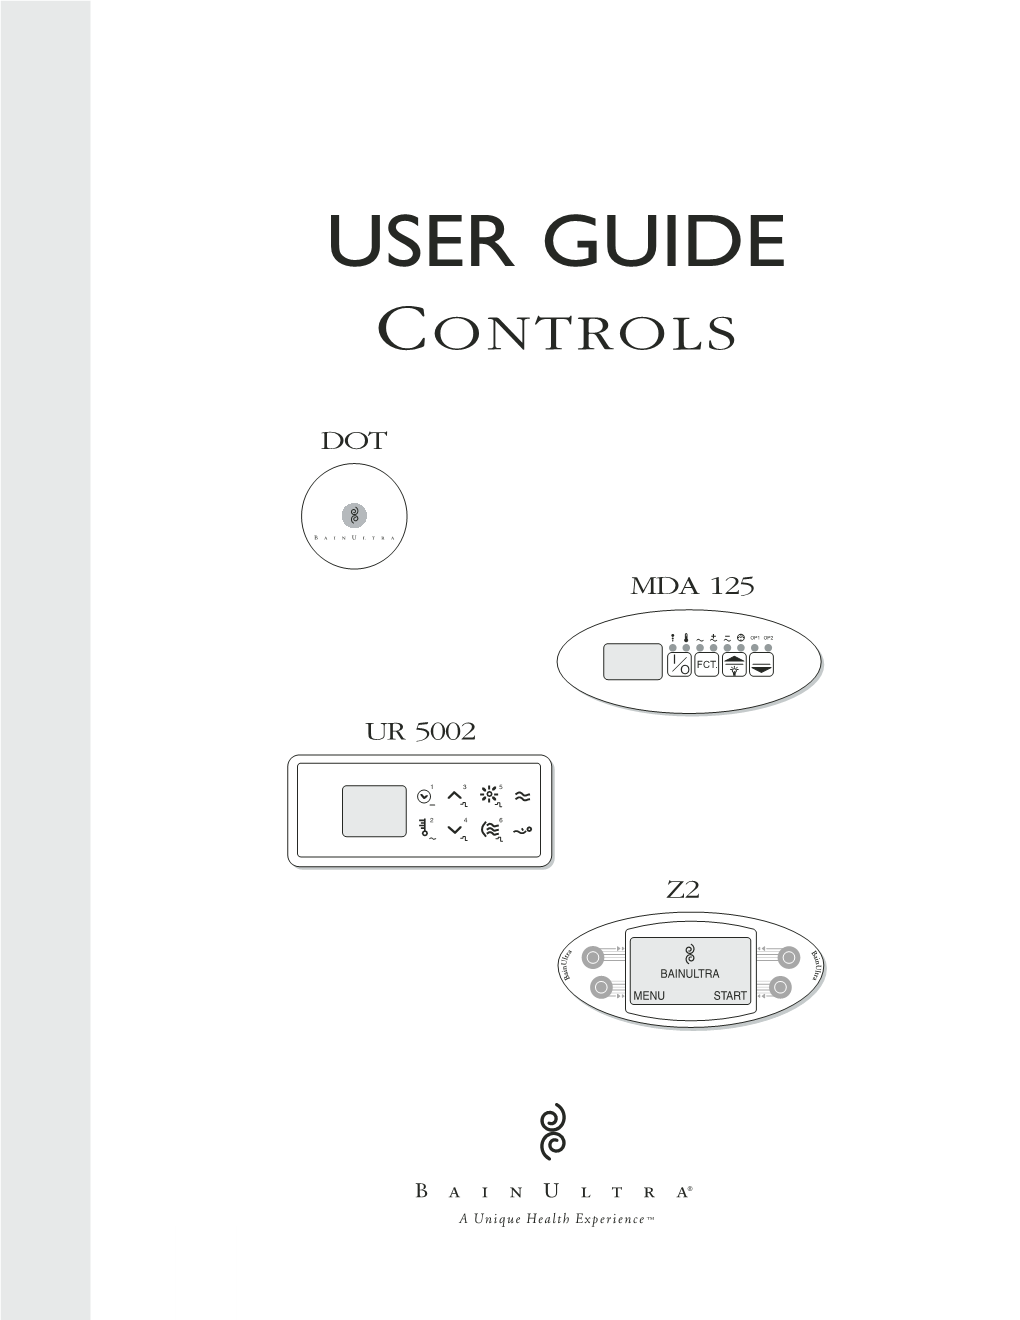 User Guide Controls